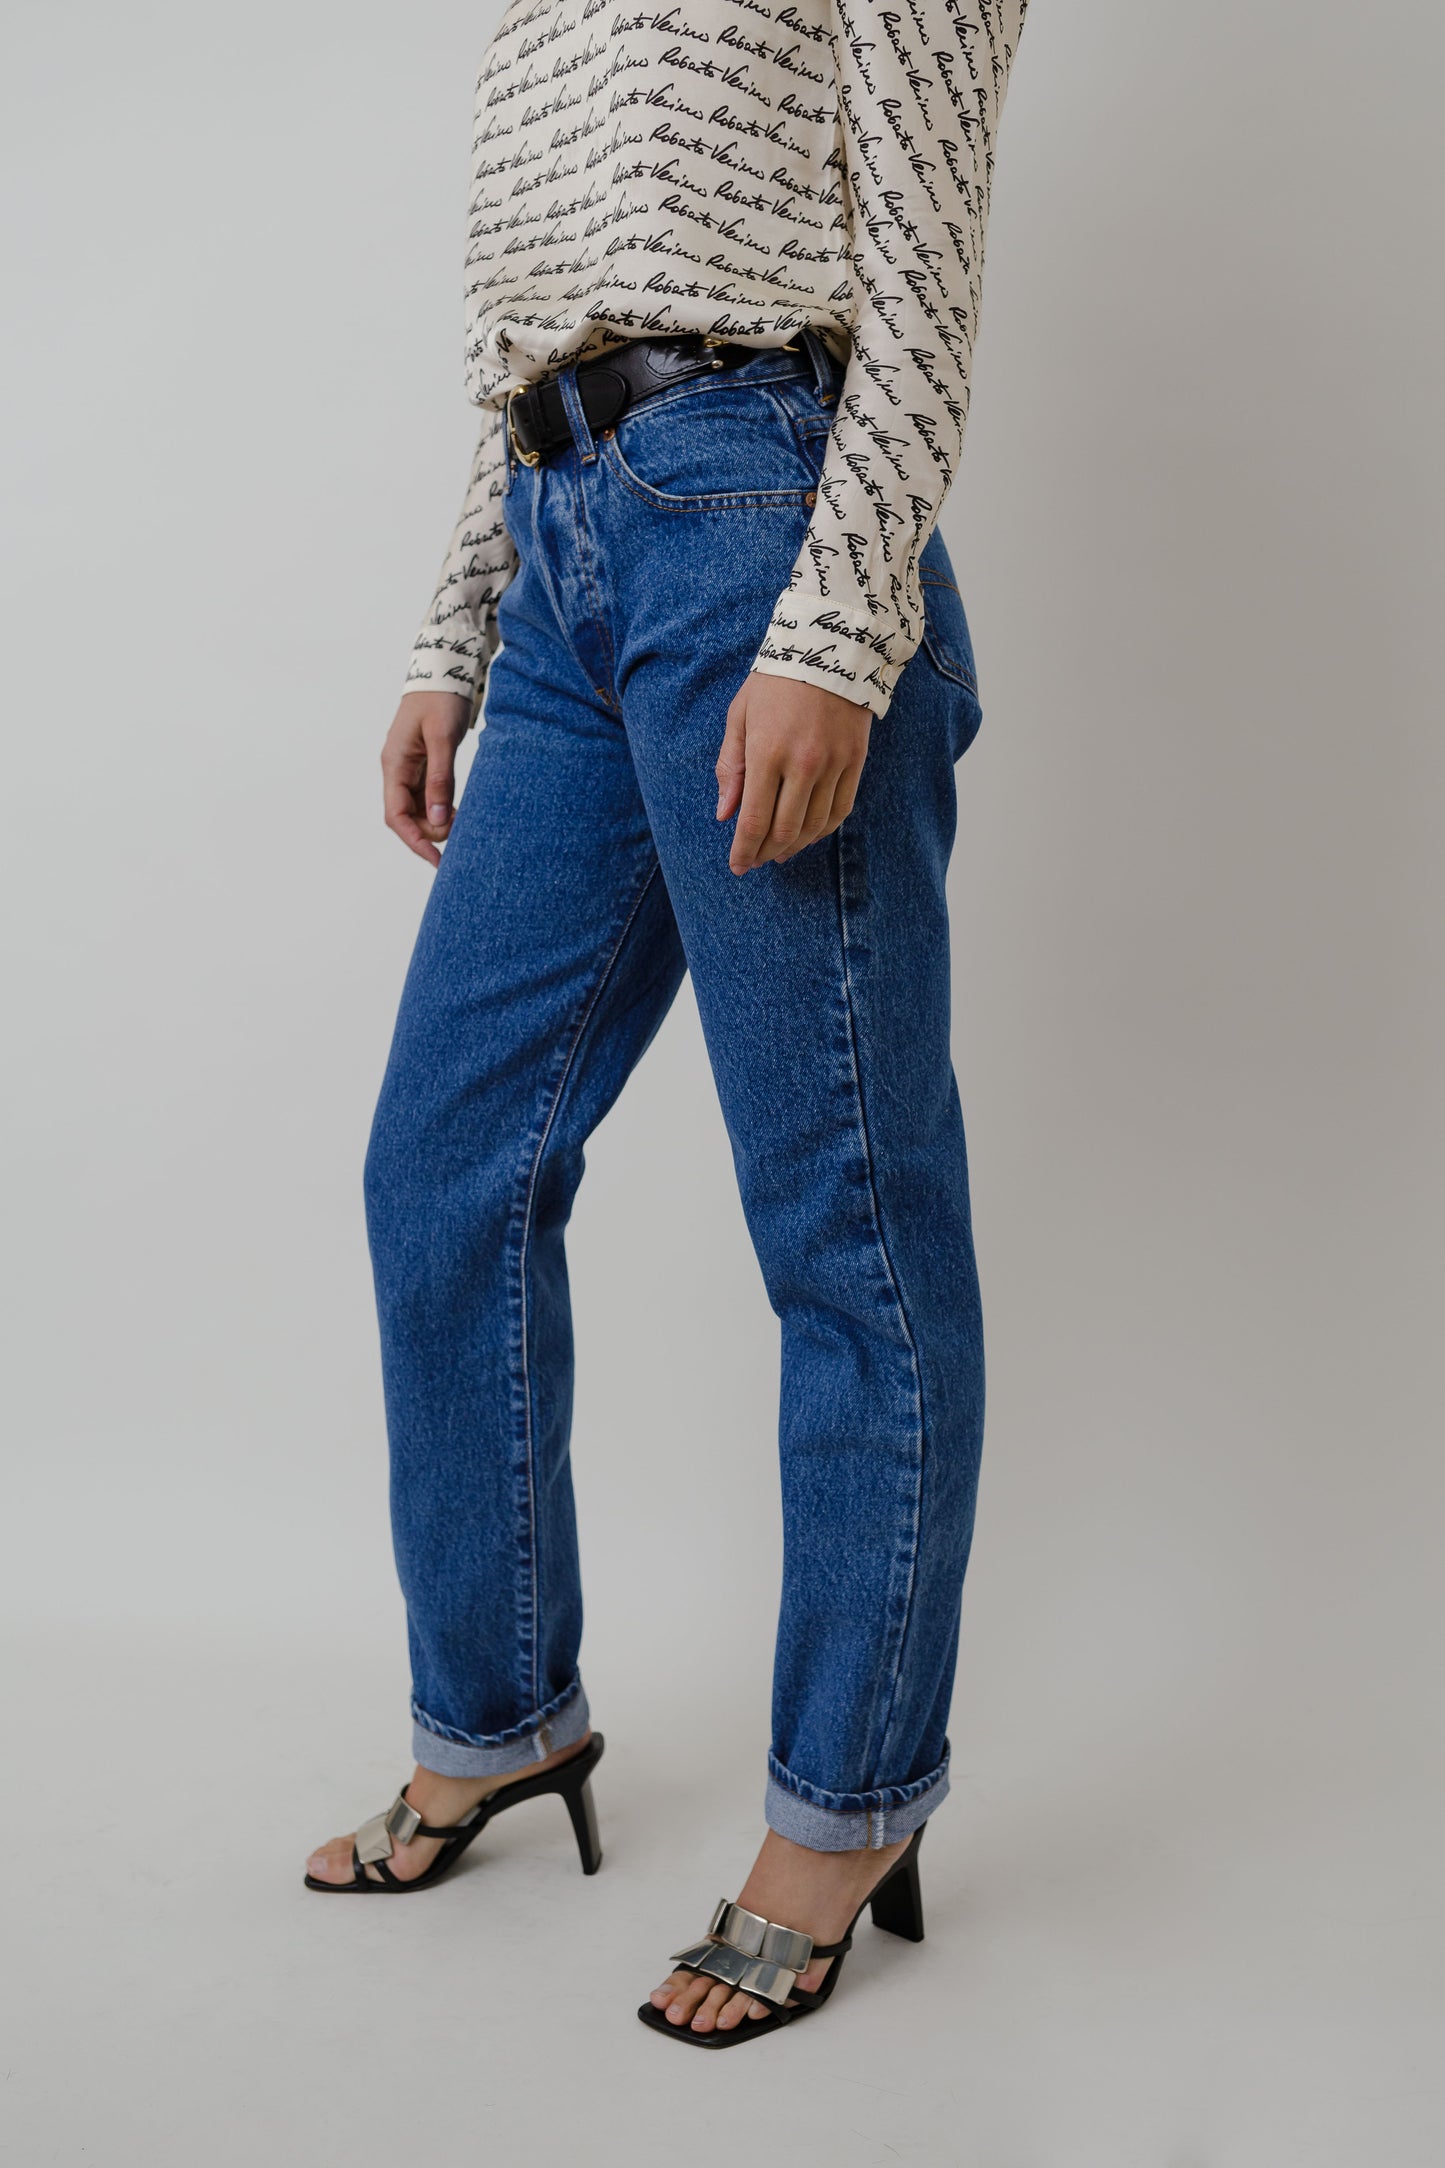 Straight-cut vintage jeans